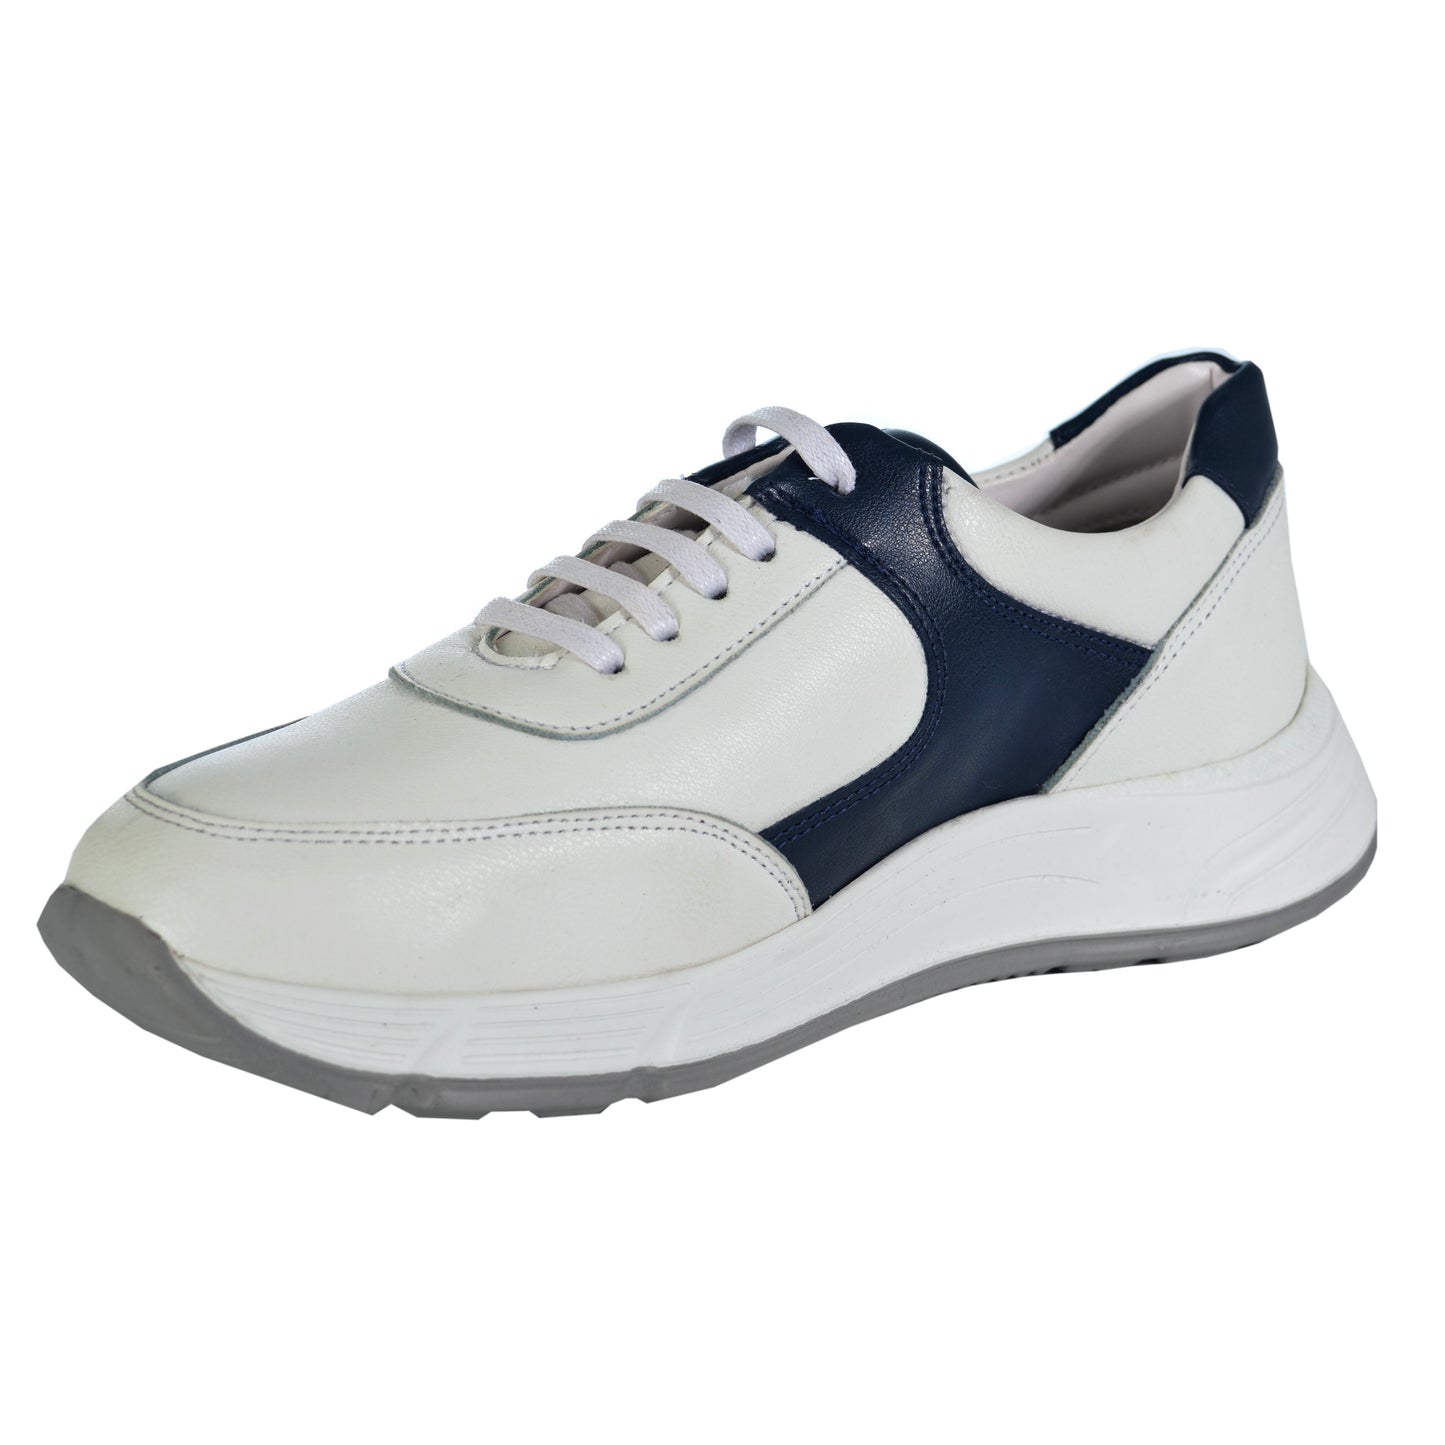 2H 9016 White/Blue Sport Shoes